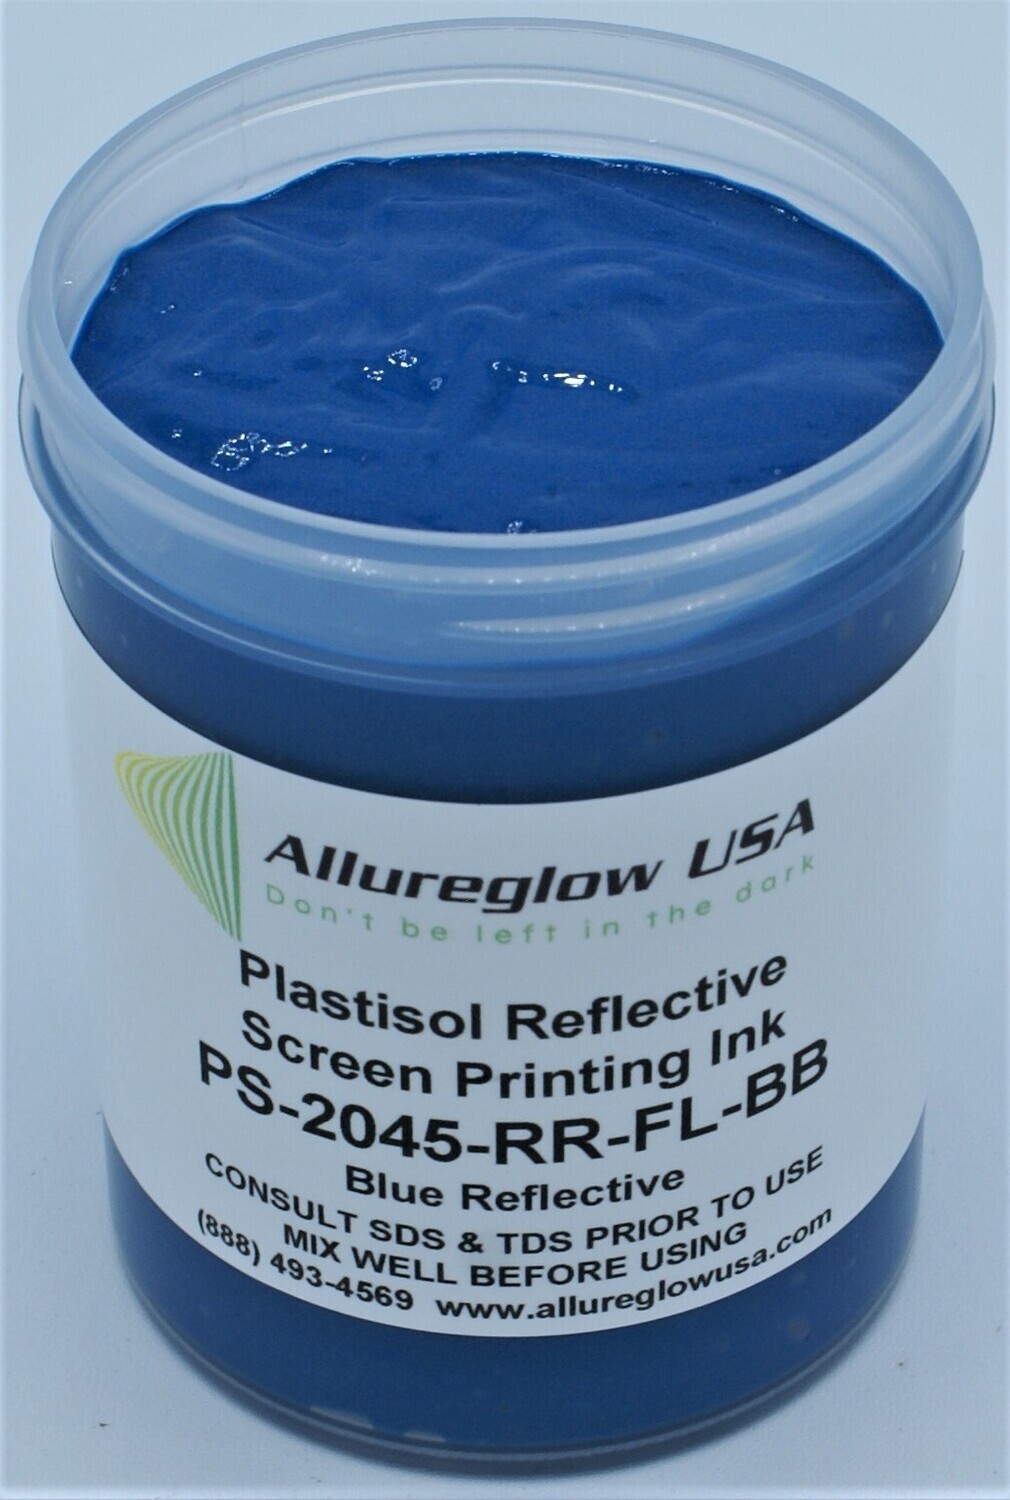 PS-2045-RR-FL-BB-FV  PLASTISOL FLUORESCENT BLUE REFLECTIVE INK 5 GALLON